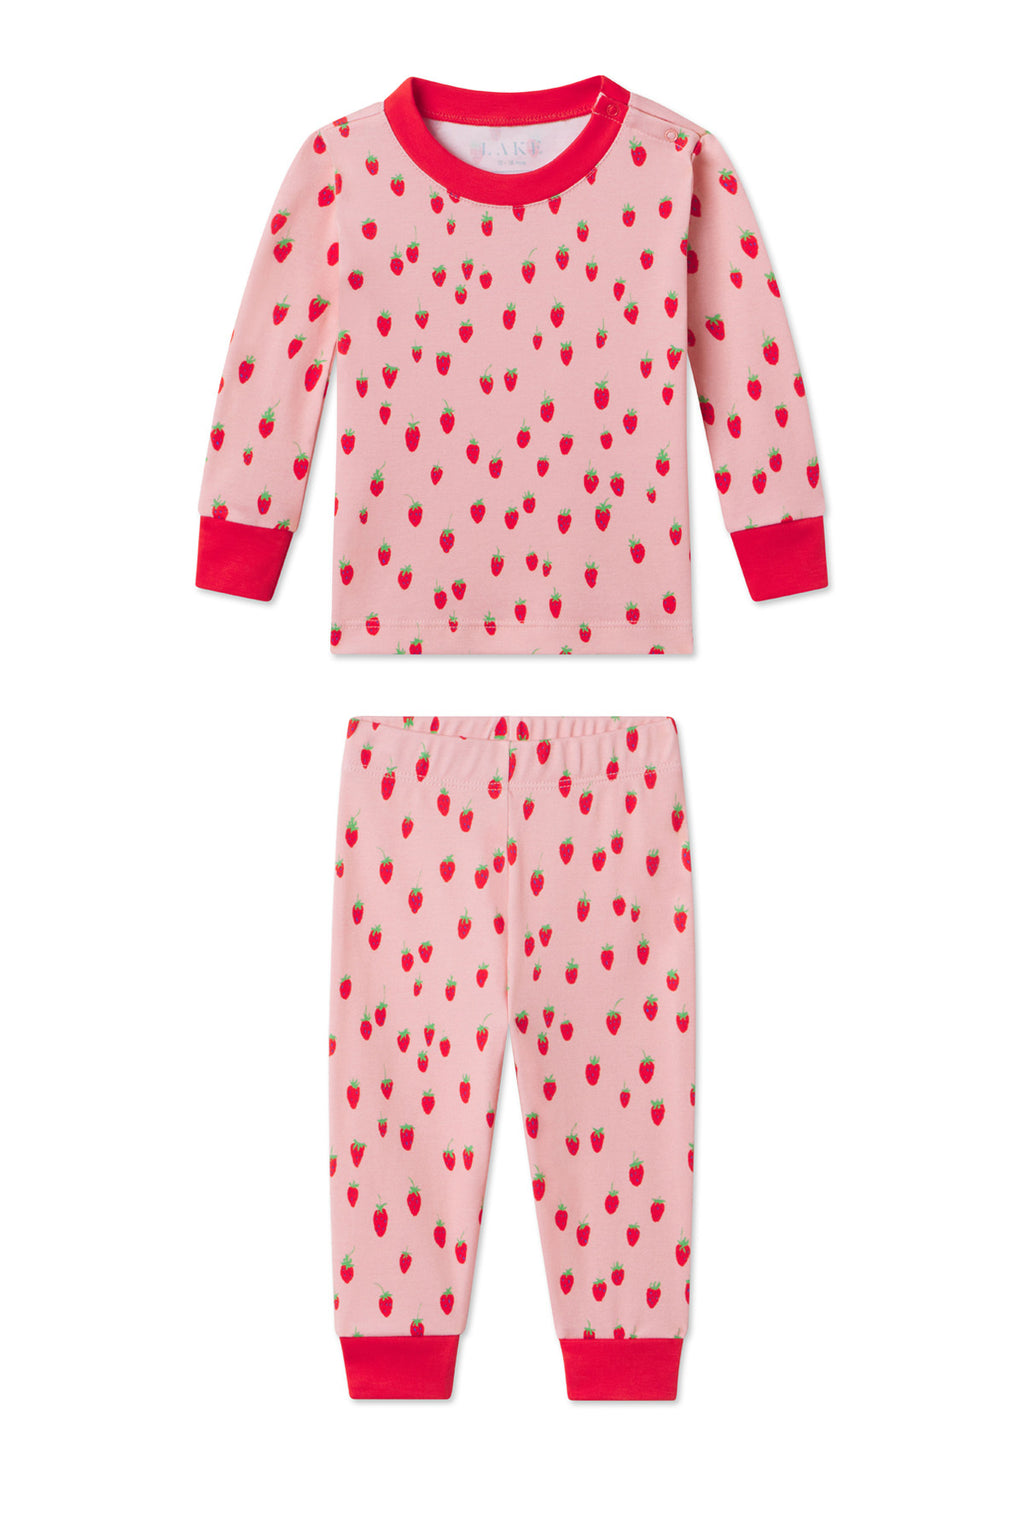 LAKE | Baby | Pima Cotton Pajamas | Strawberry Patch Baby Long-Long Set